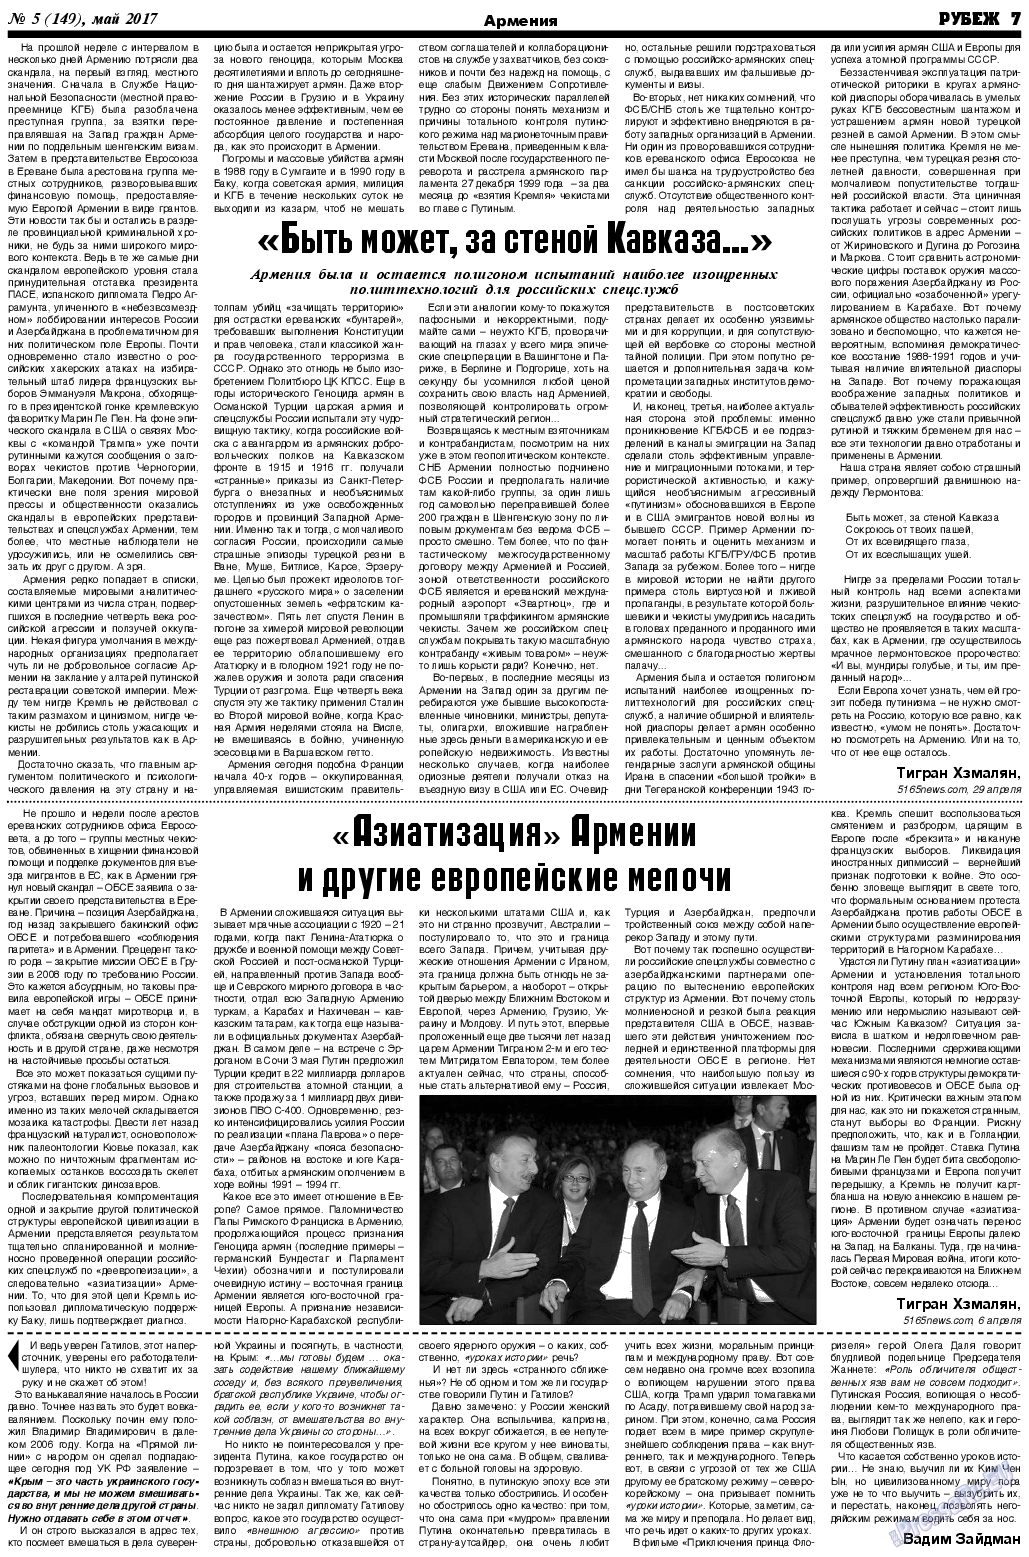 Рубеж, газета. 2017 №5 стр.7